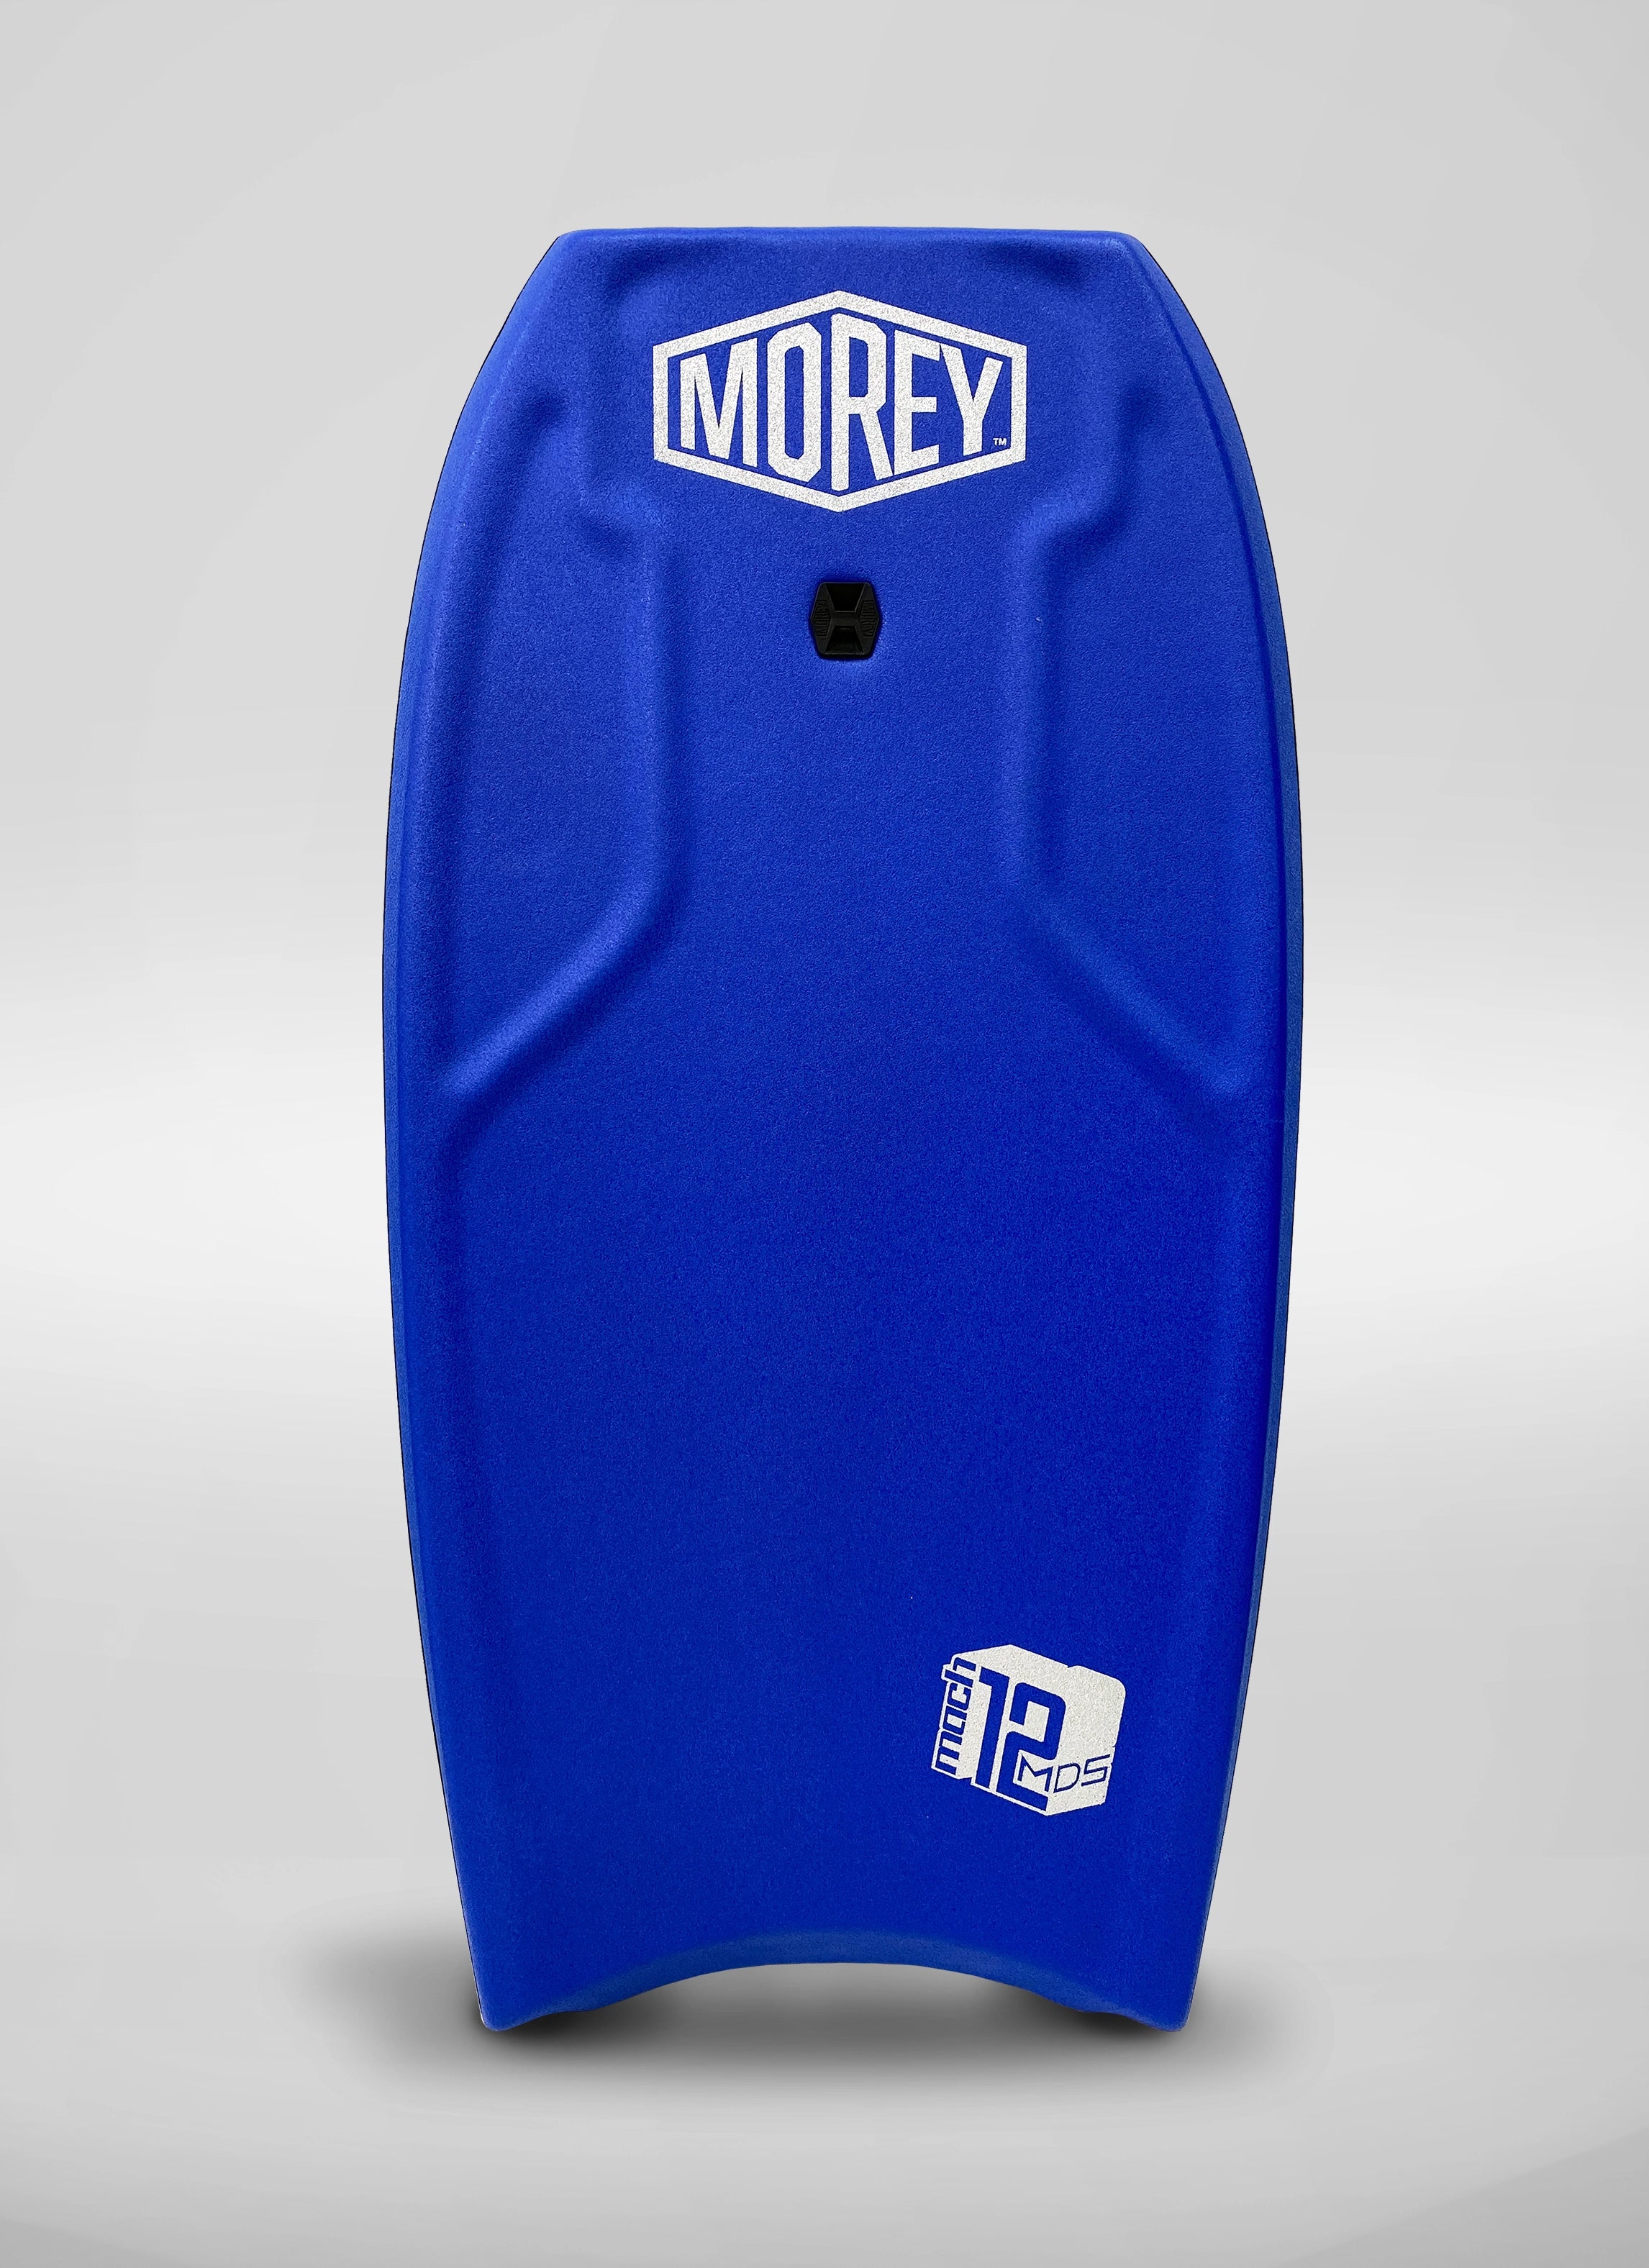 Morey Bodyboards MACH12 MDS online exclusive – Morey BodyBoards